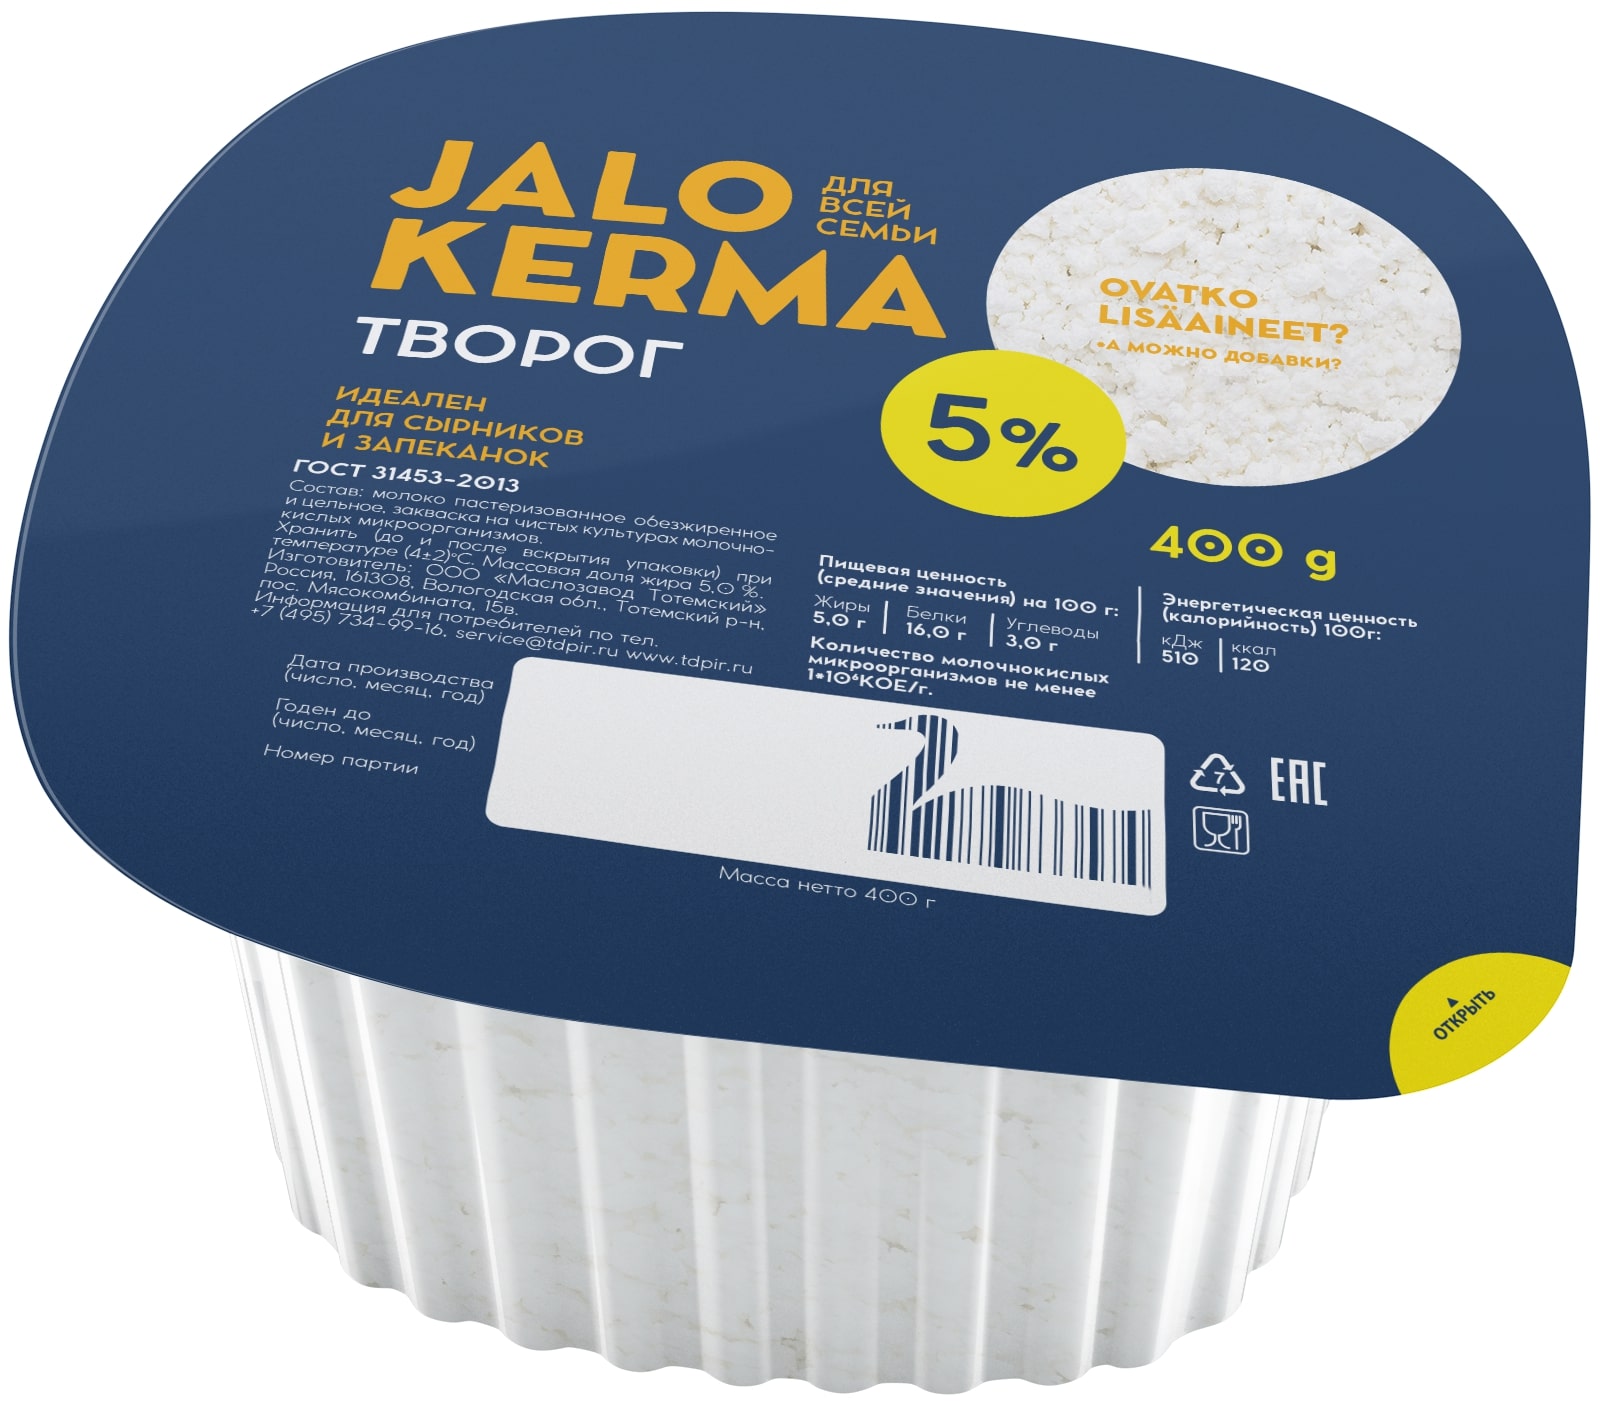 Cottage cheese 5% "JALO KERMA" 400 g